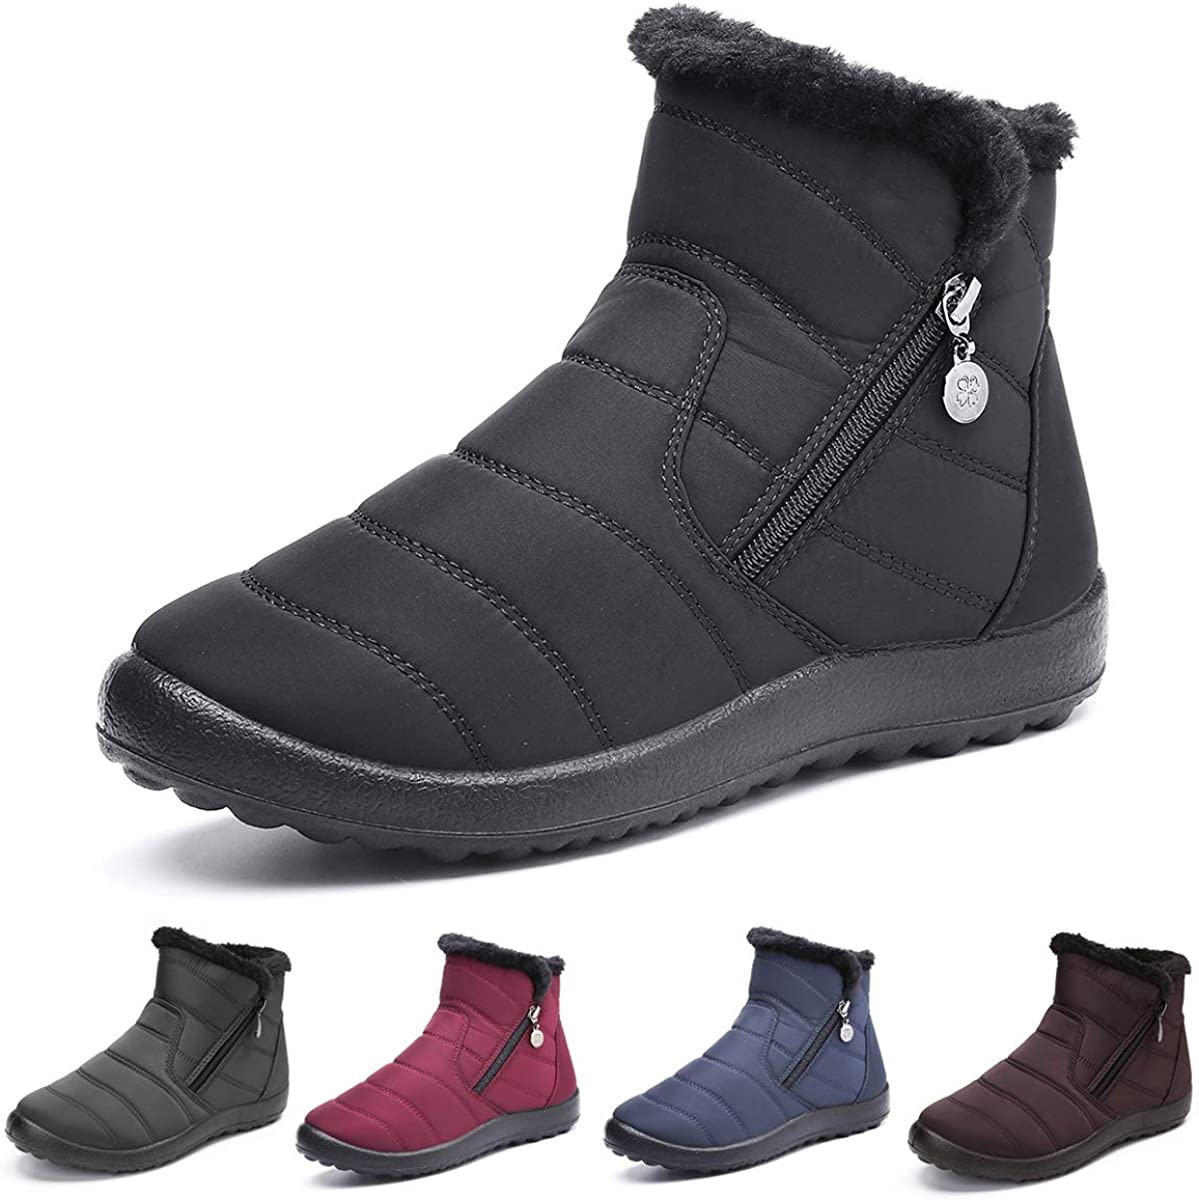 Waterproof Warm Snow Boots Non-Slip Womens Winter Snow Boots 